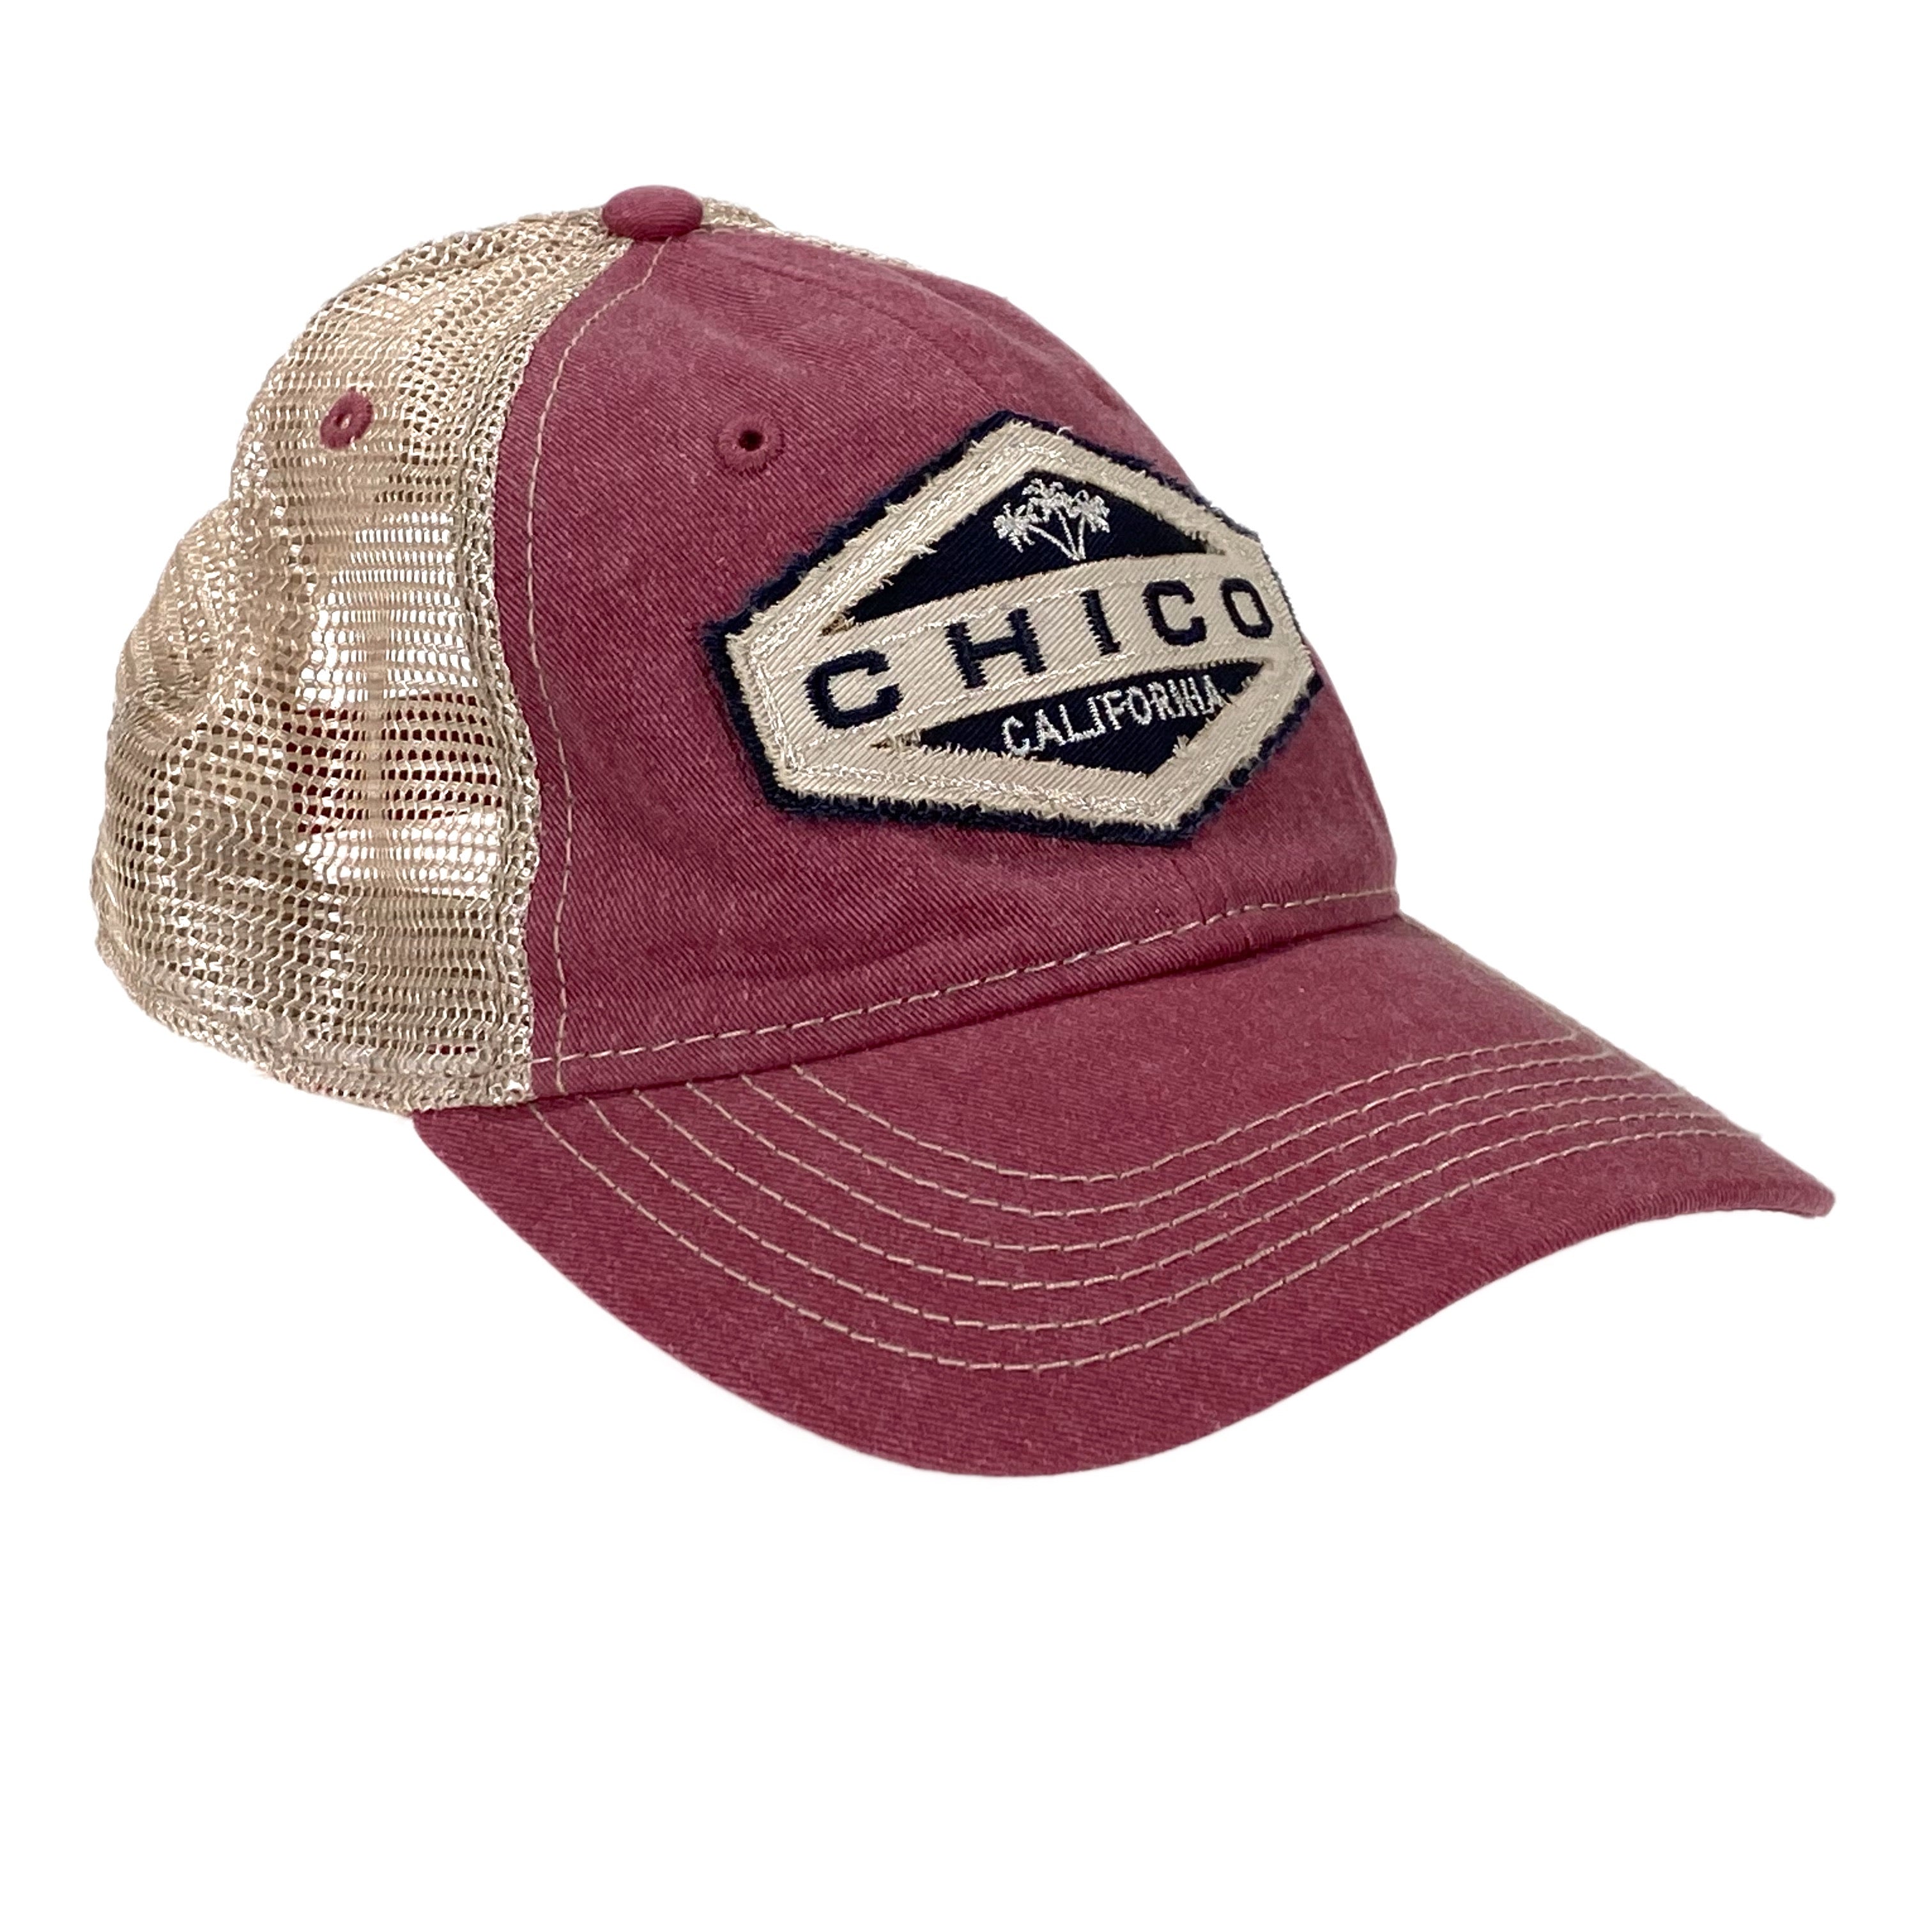 Chico Hat - Easy Street Red/Khaki   3275181.1